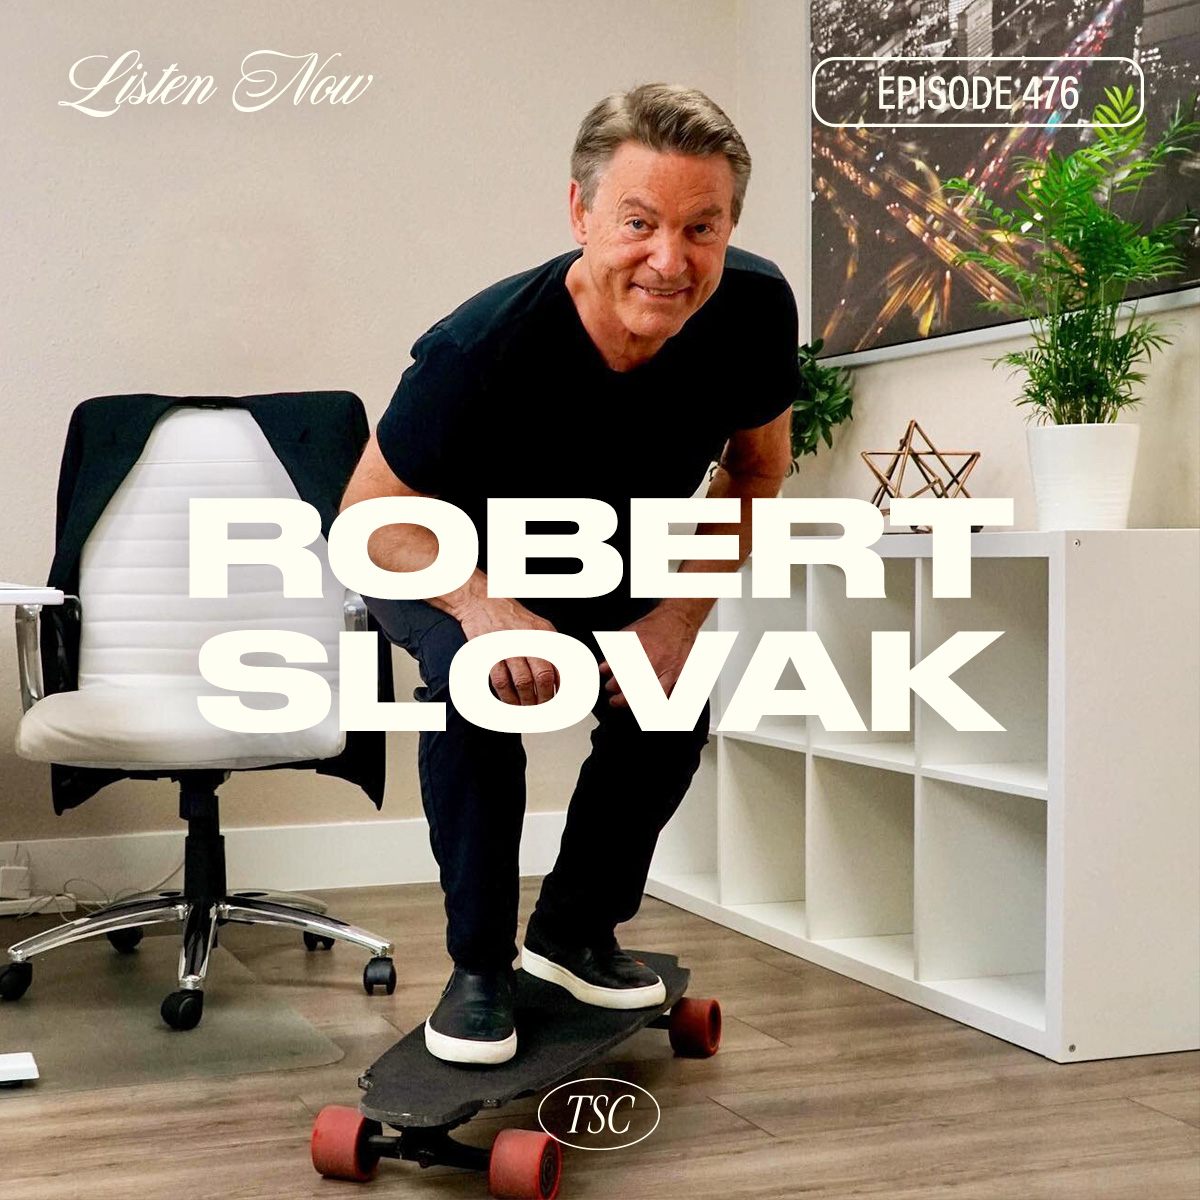 Robert Slovak